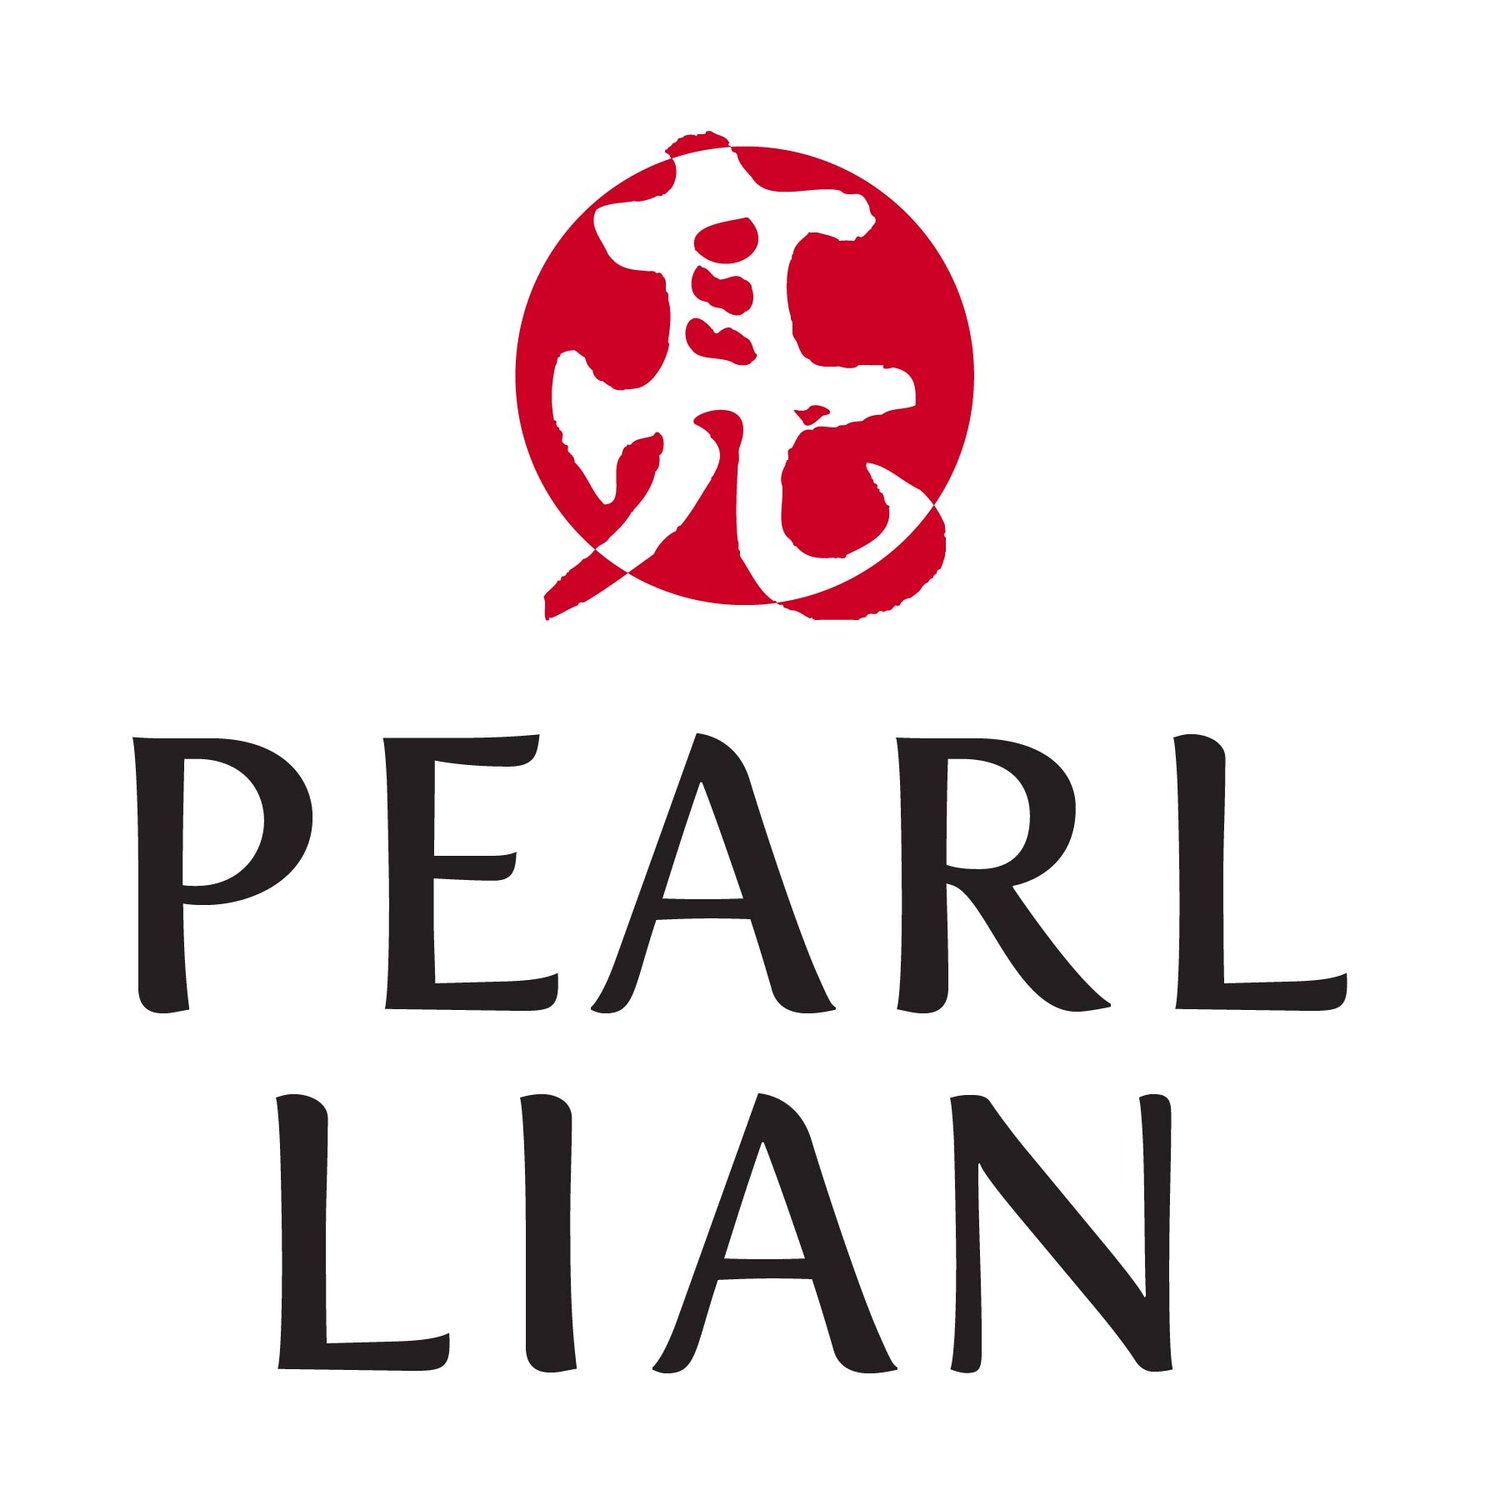 Pearl Lian Restaurant